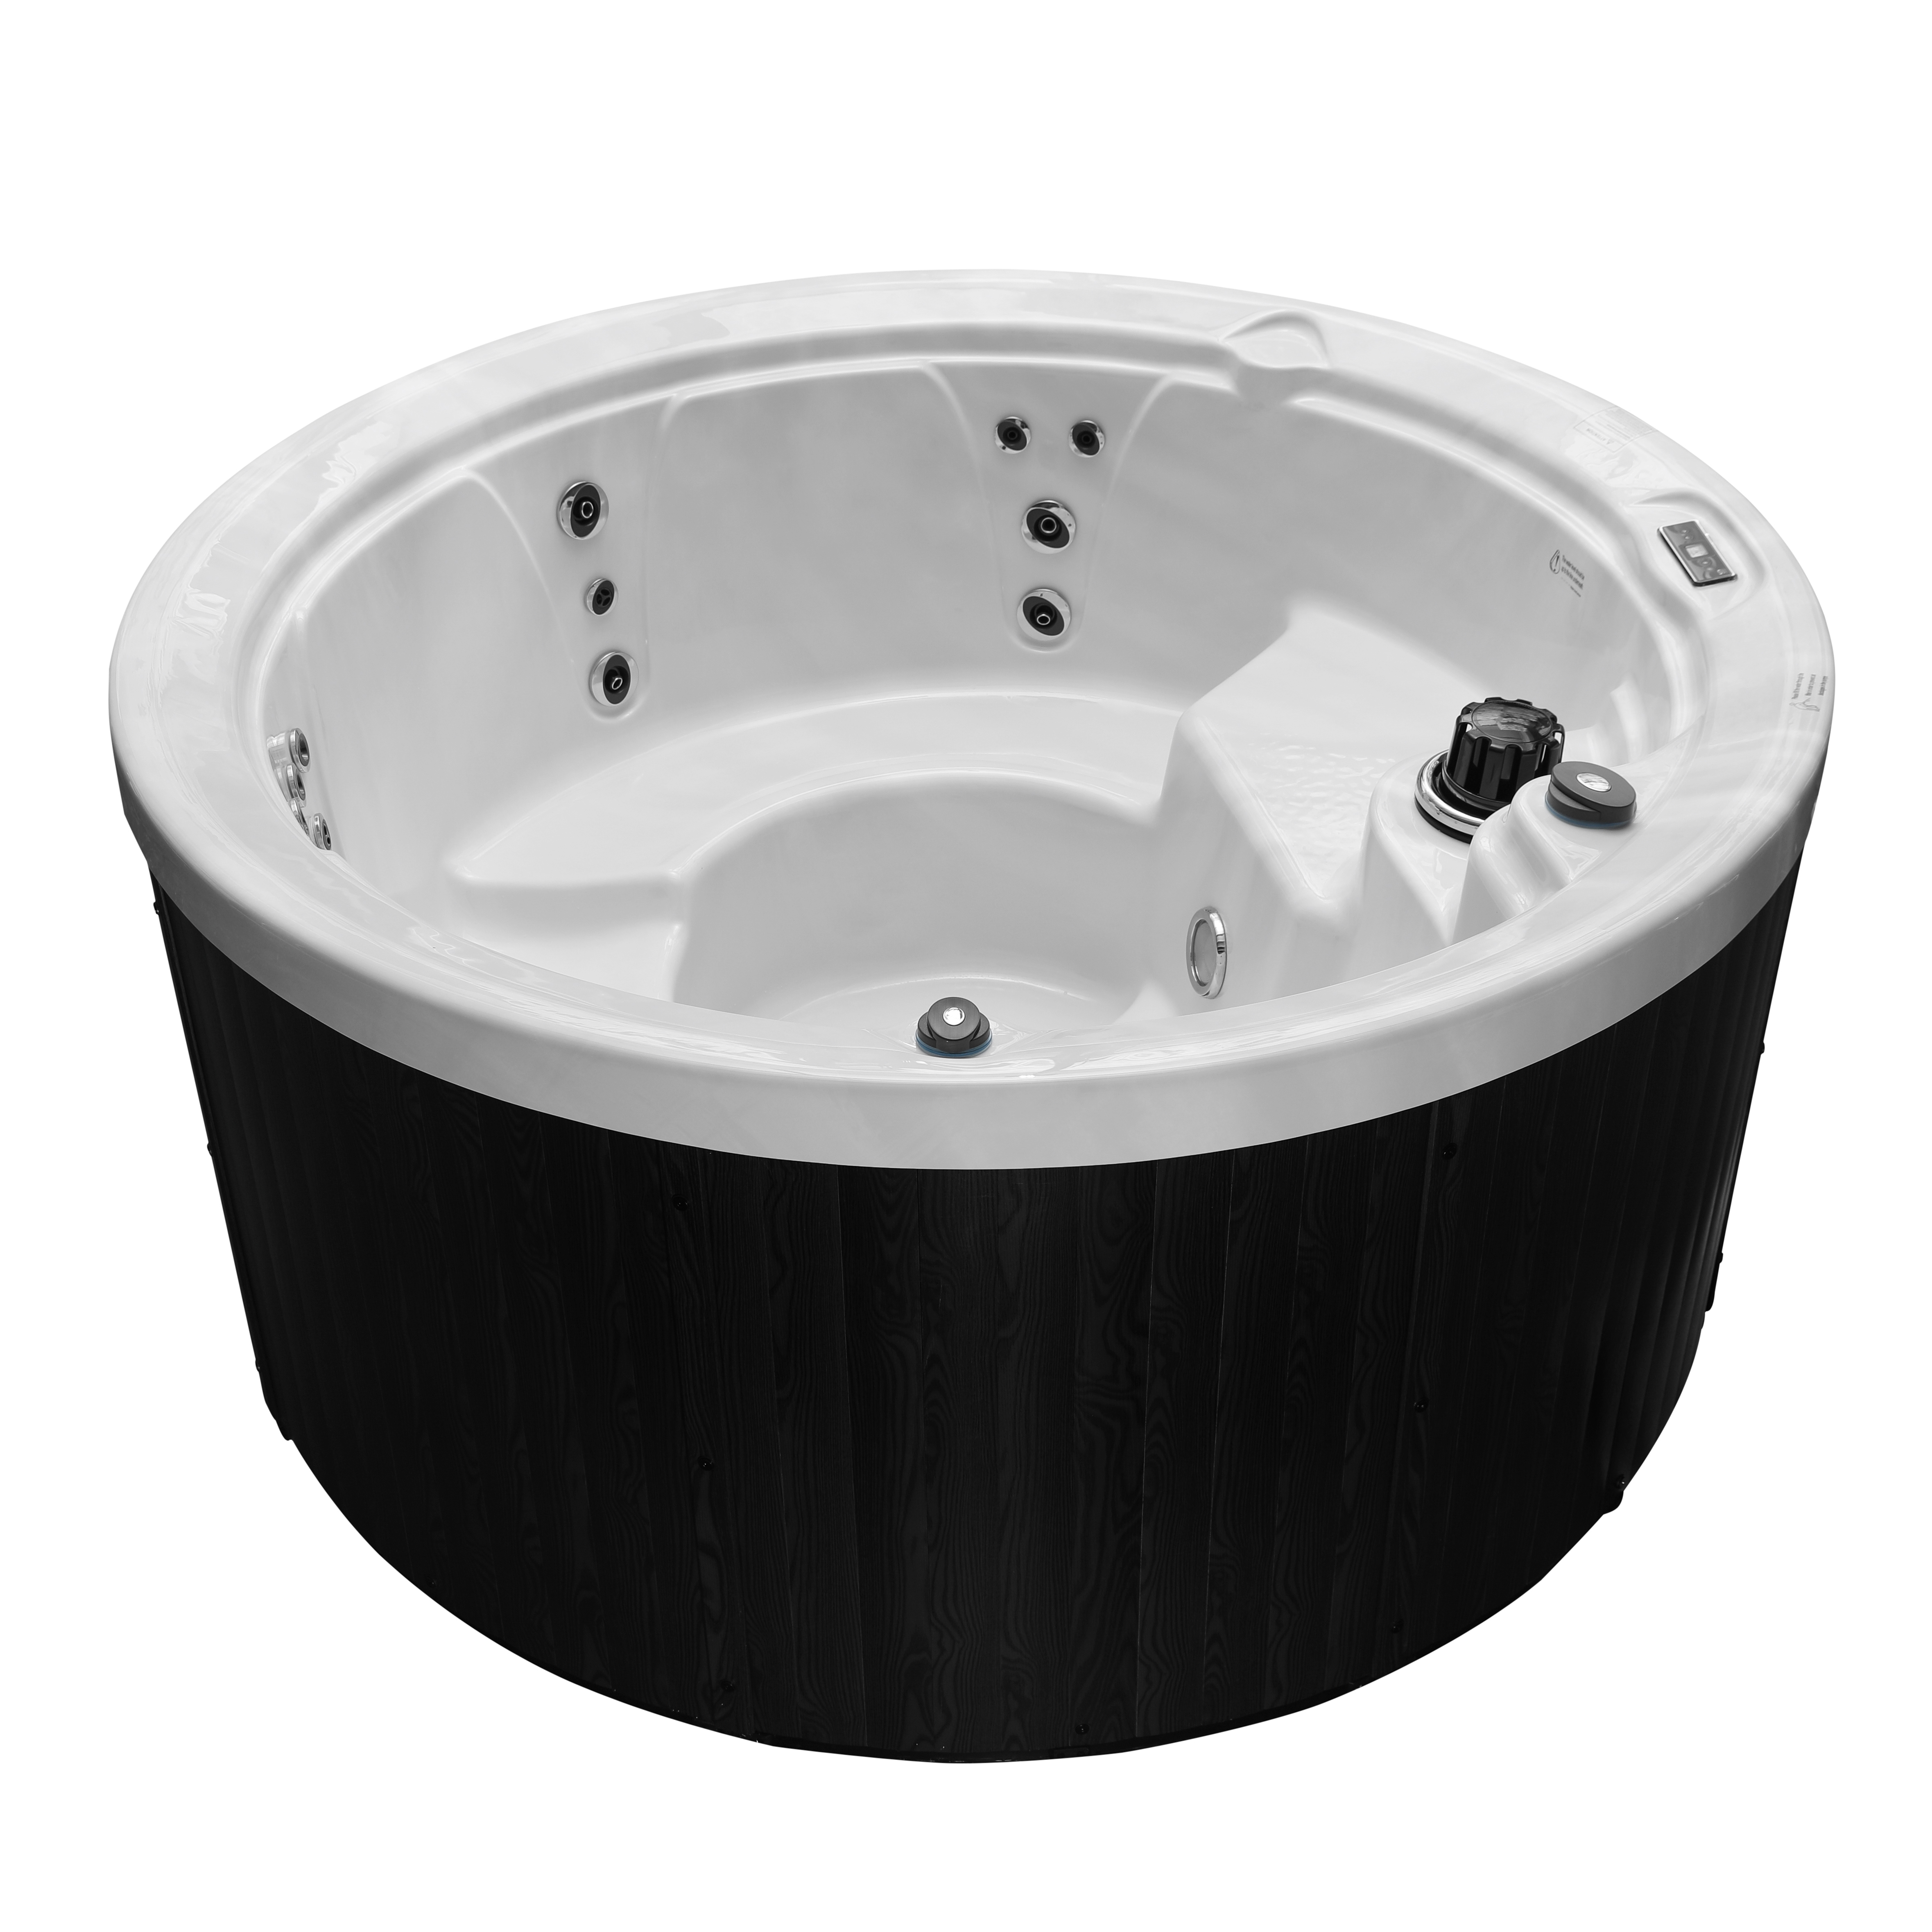 Polar Hot Tubs - Australis Electric Round Hot Tub - Hybrid Ready